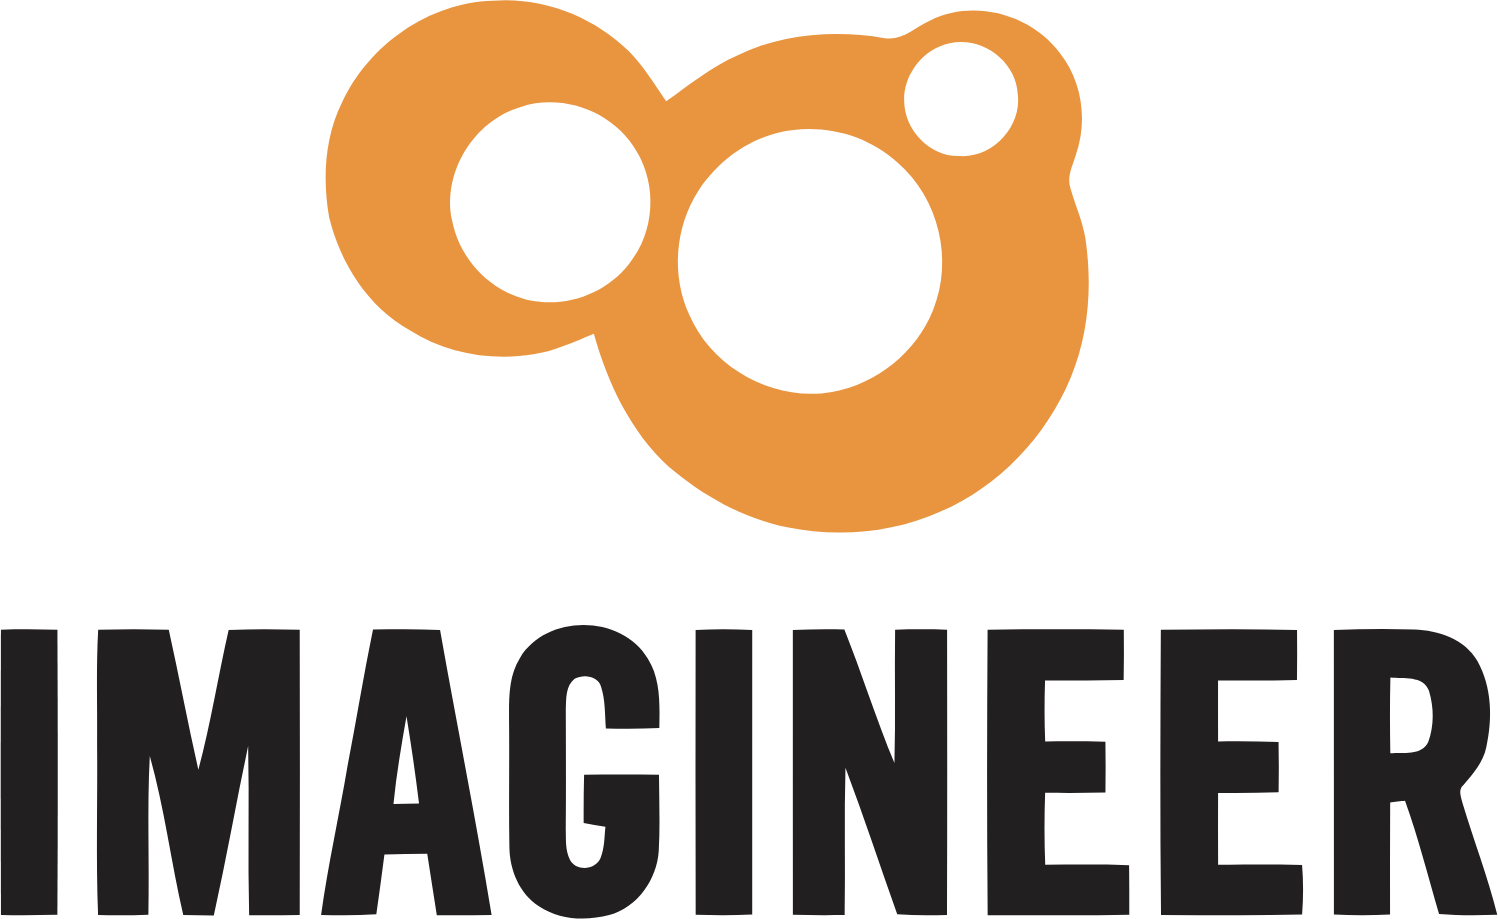 Imagineer logo large (transparent PNG)